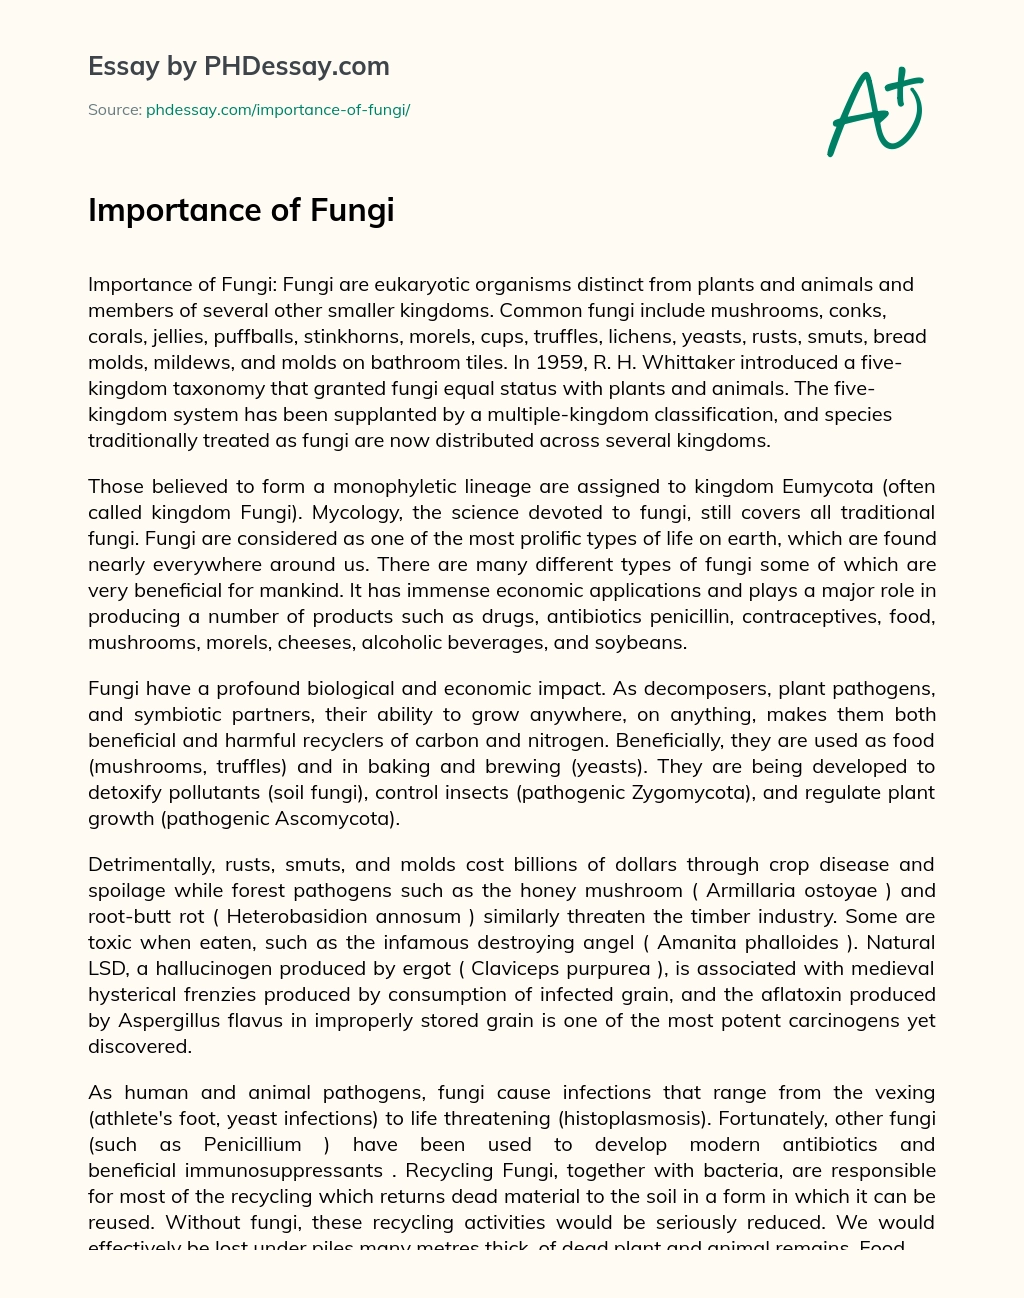 Importance of Fungi essay